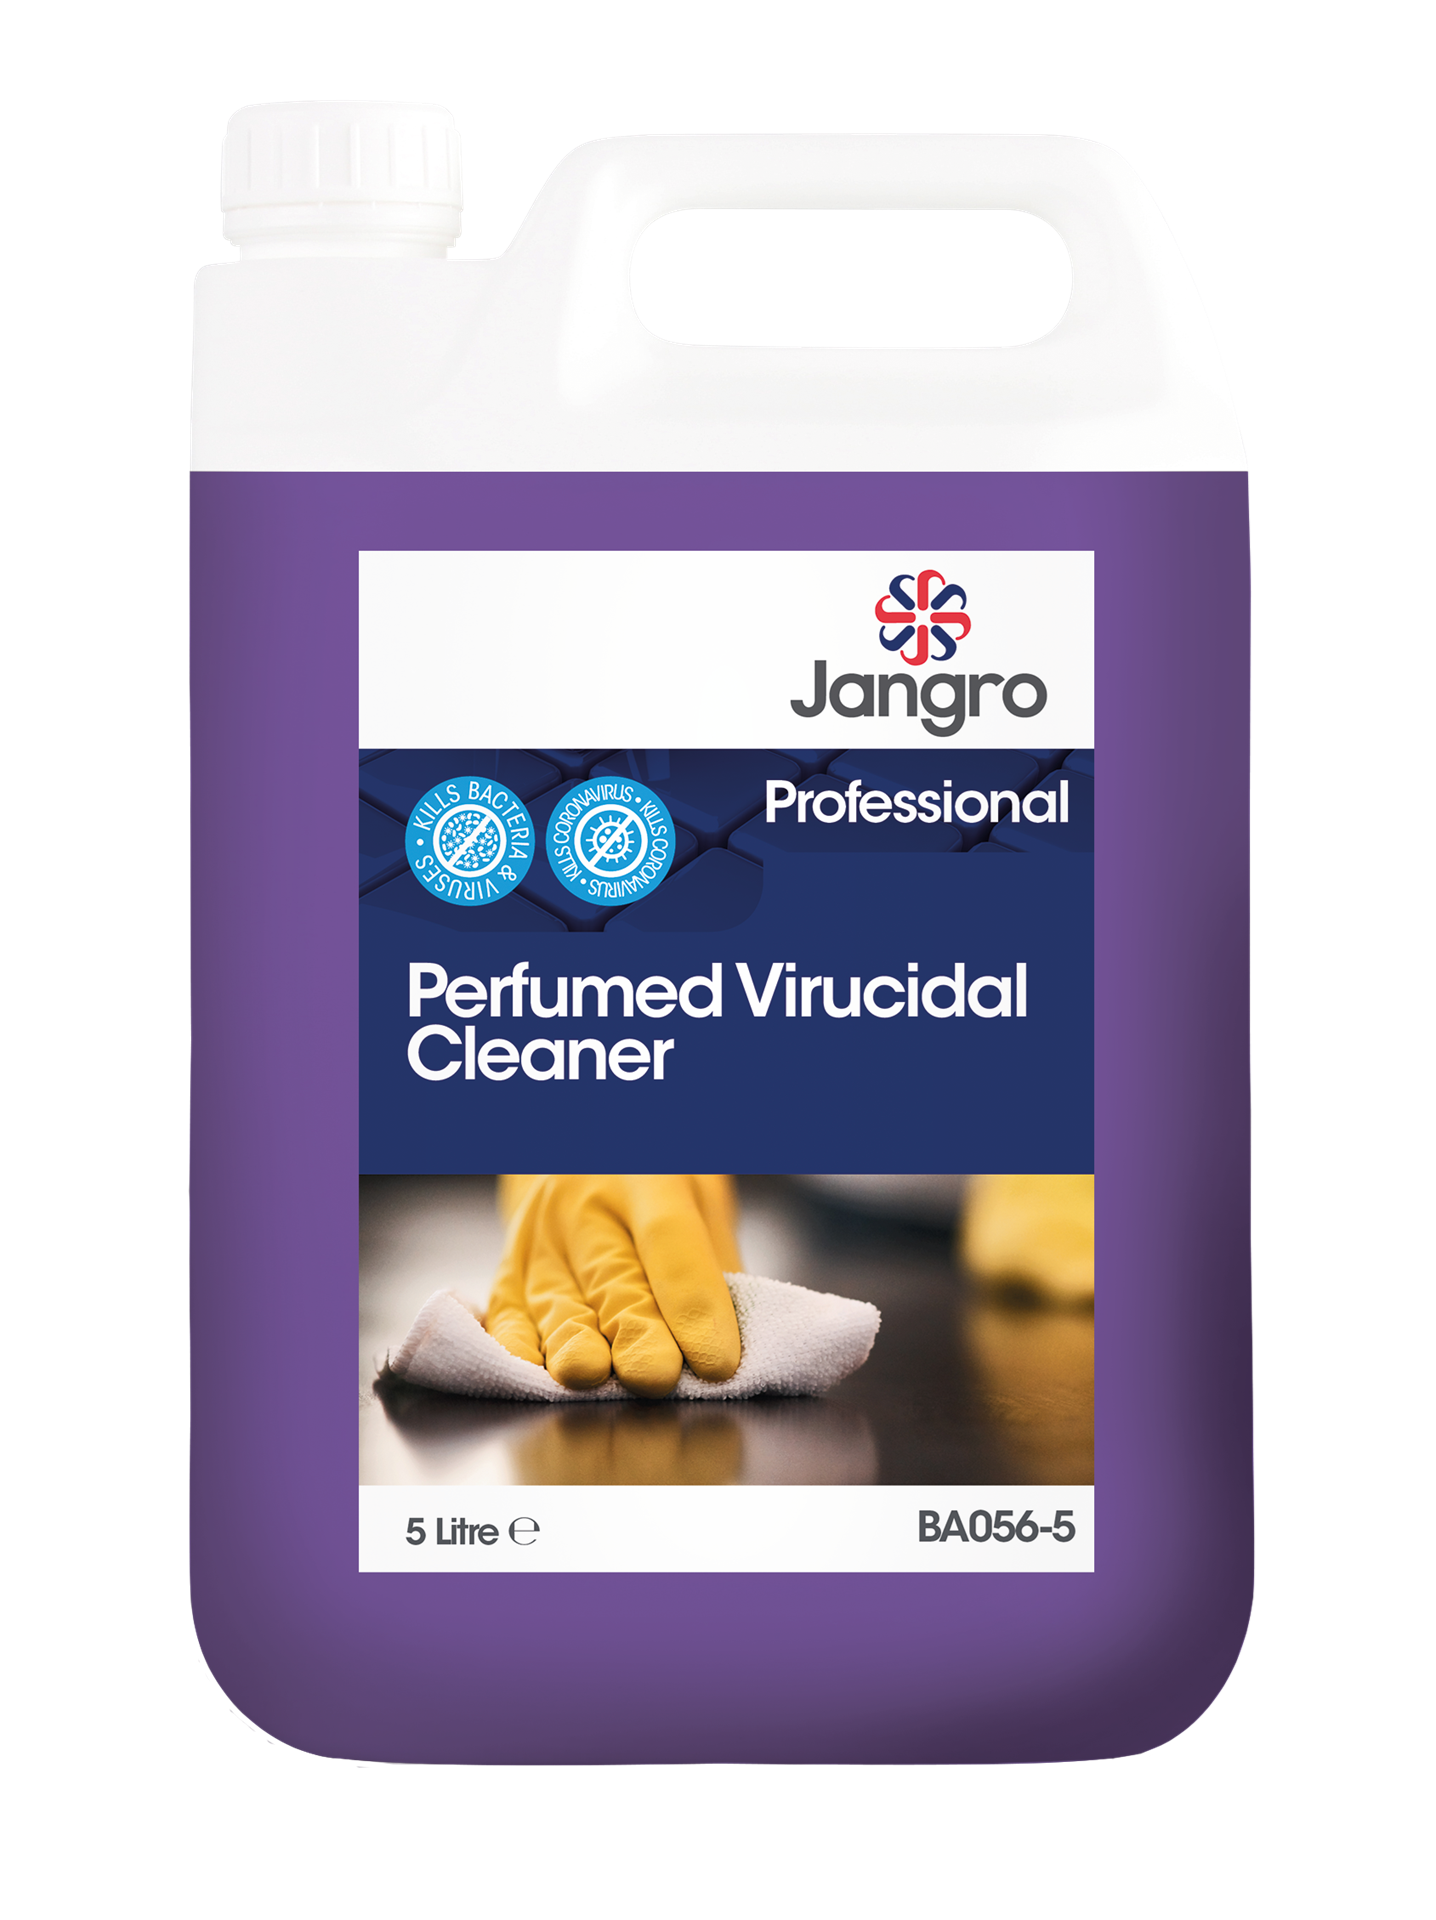 Jangro Professional Perfumed Virucidal Cleaner, 5 Litre - C066-5LX2-JANGRO